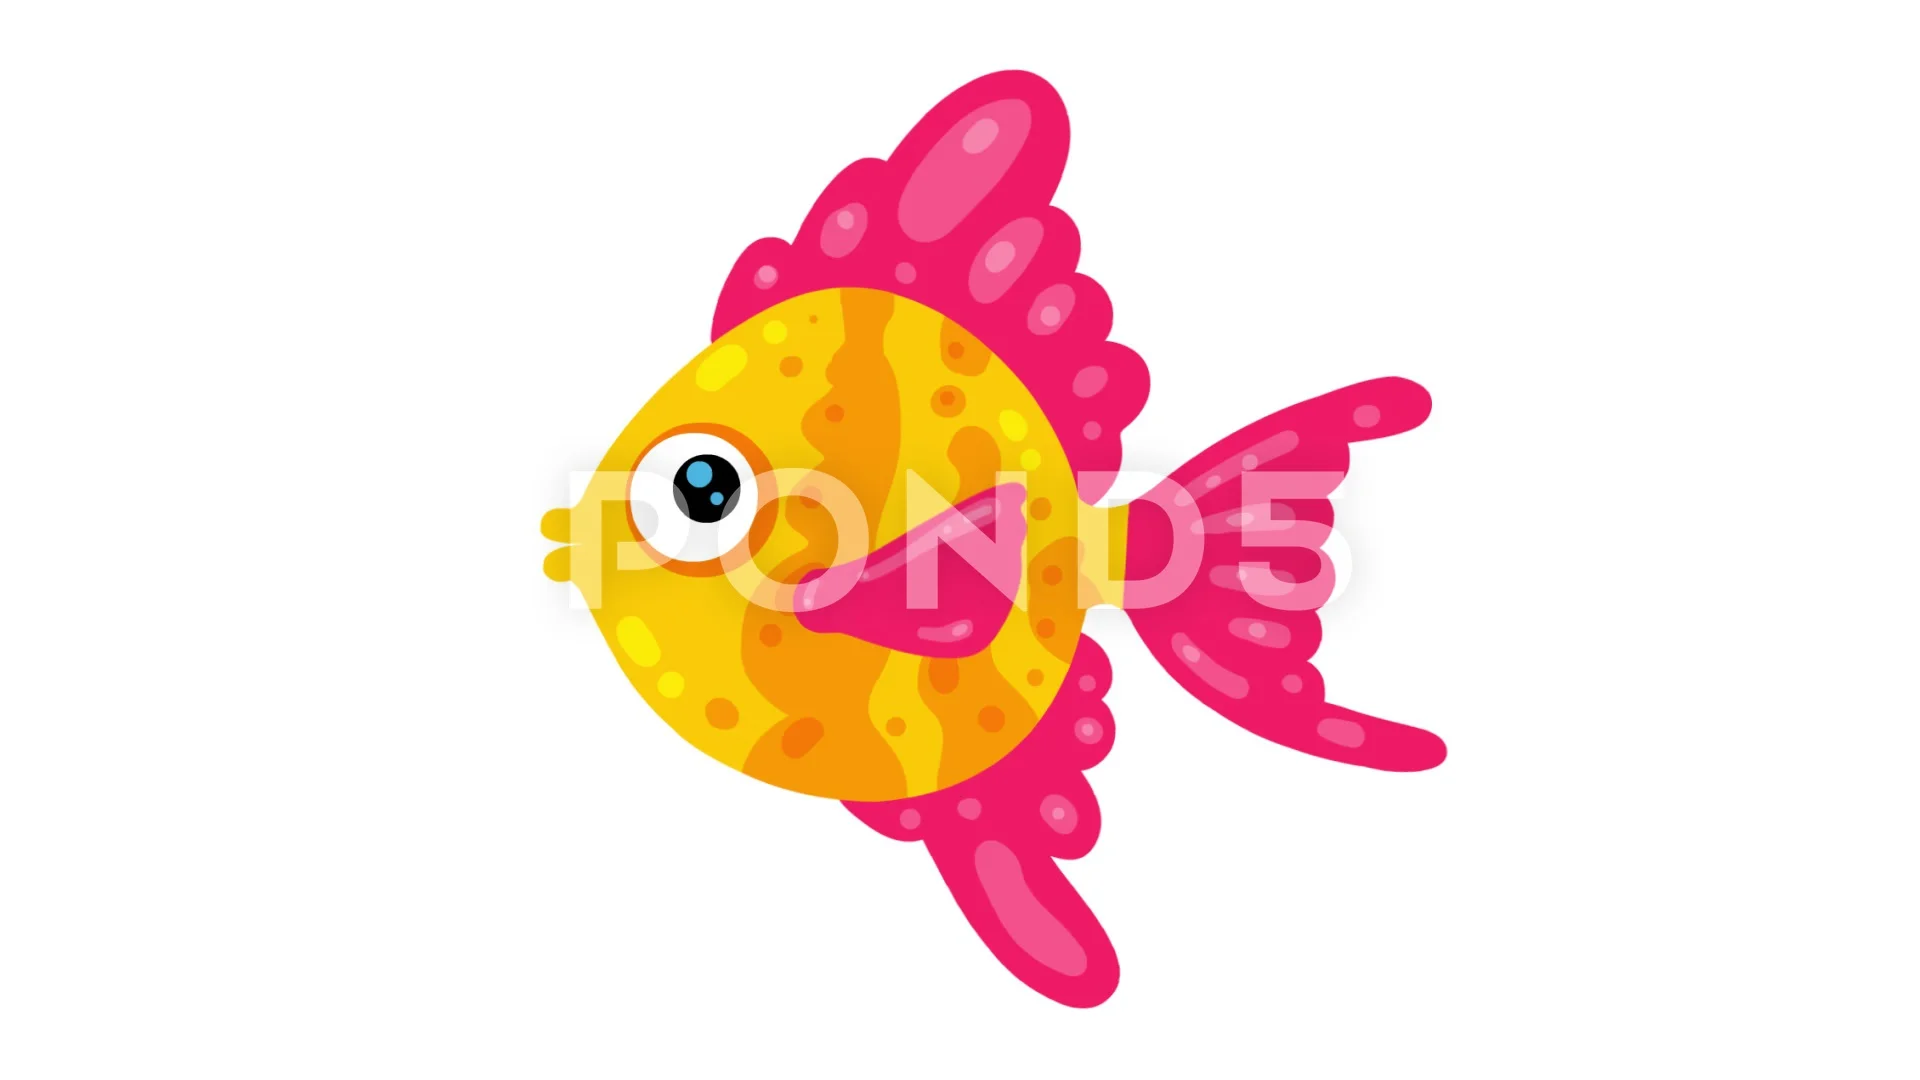 fish cartoon images